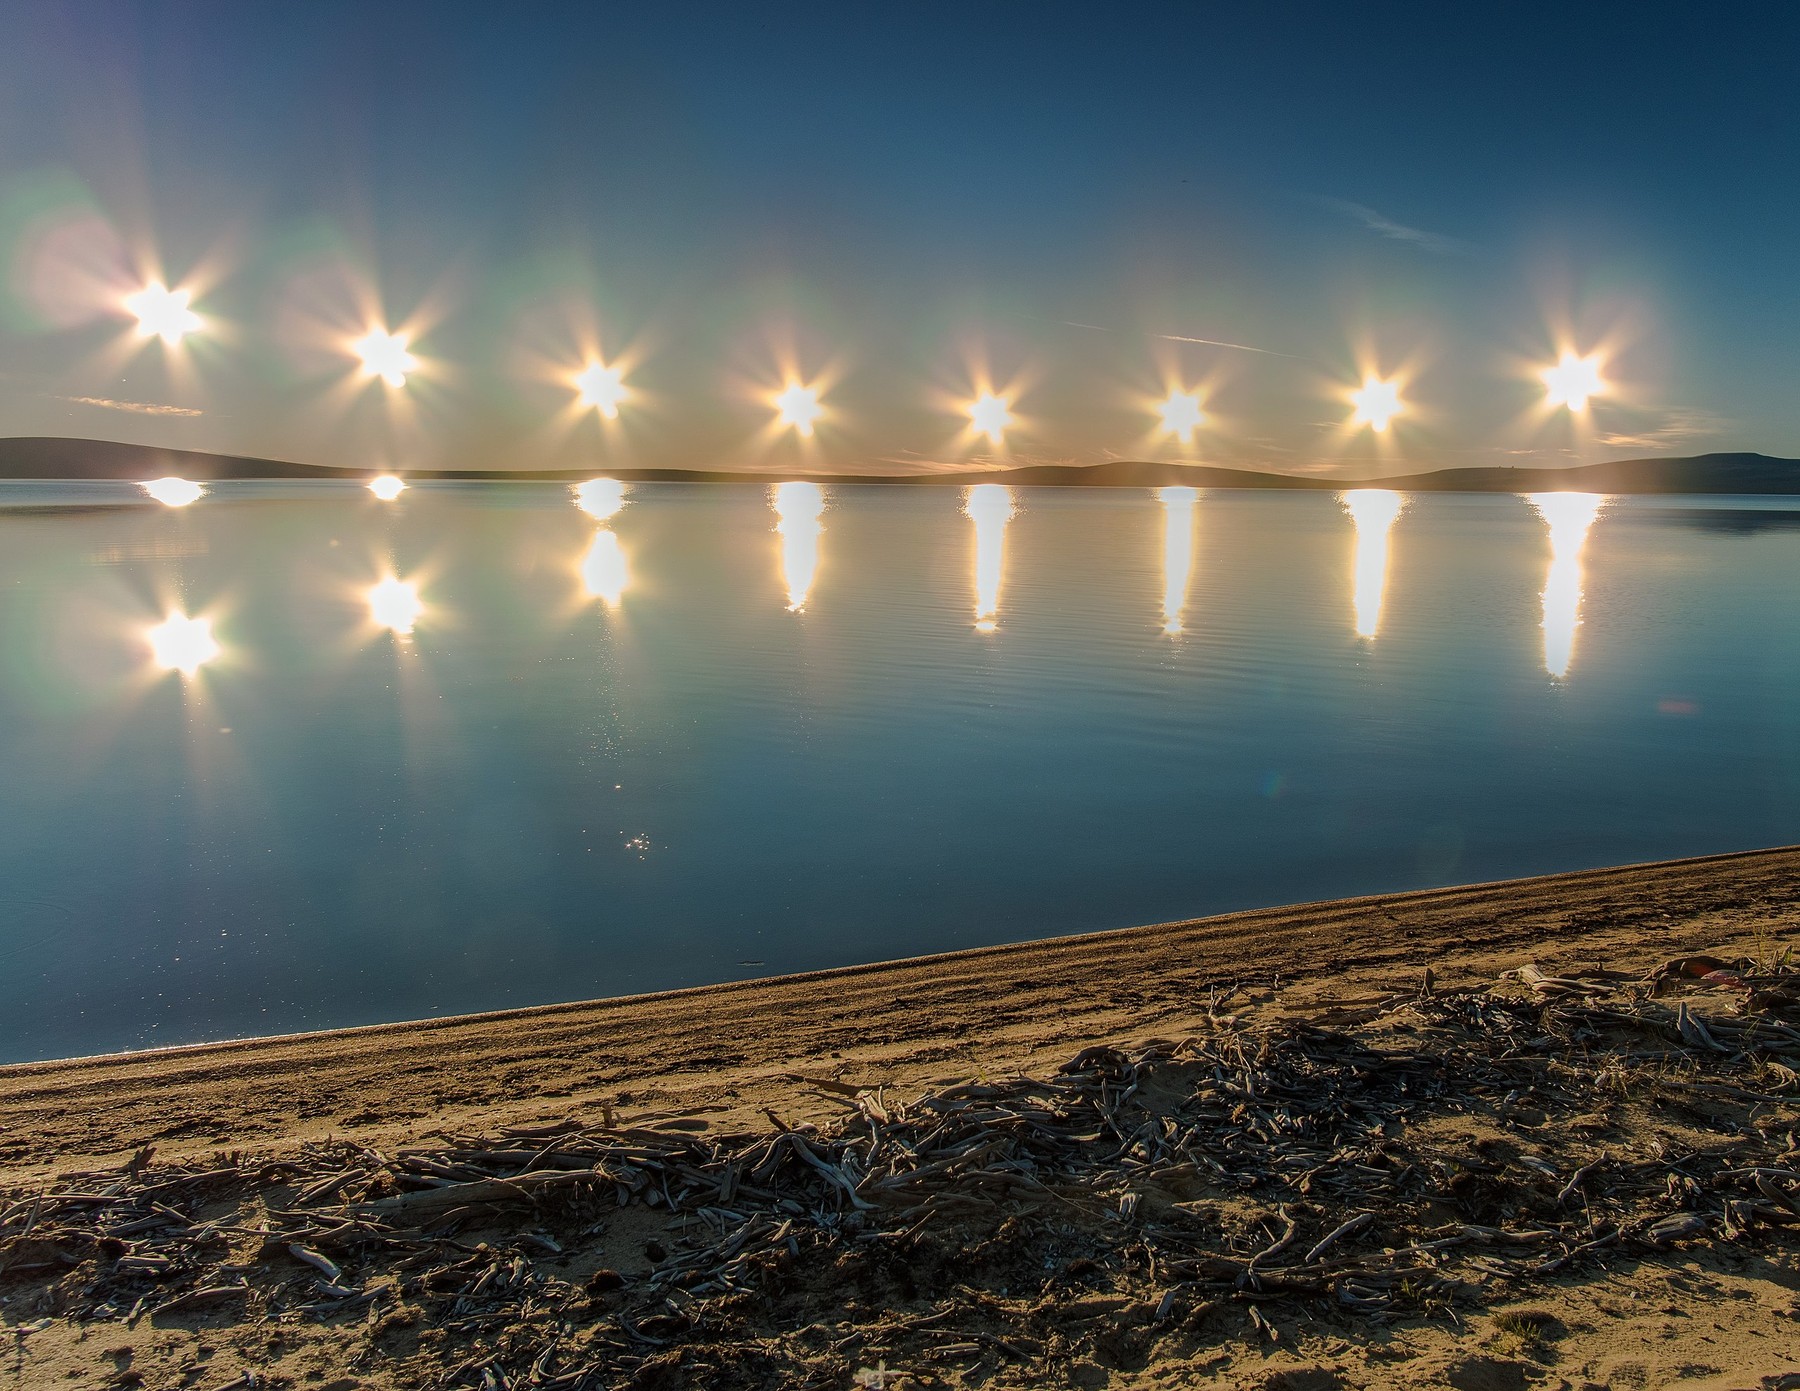 
Multiple exposure of the midnight sun on Lake Ozhogino in Yakutia, Russia